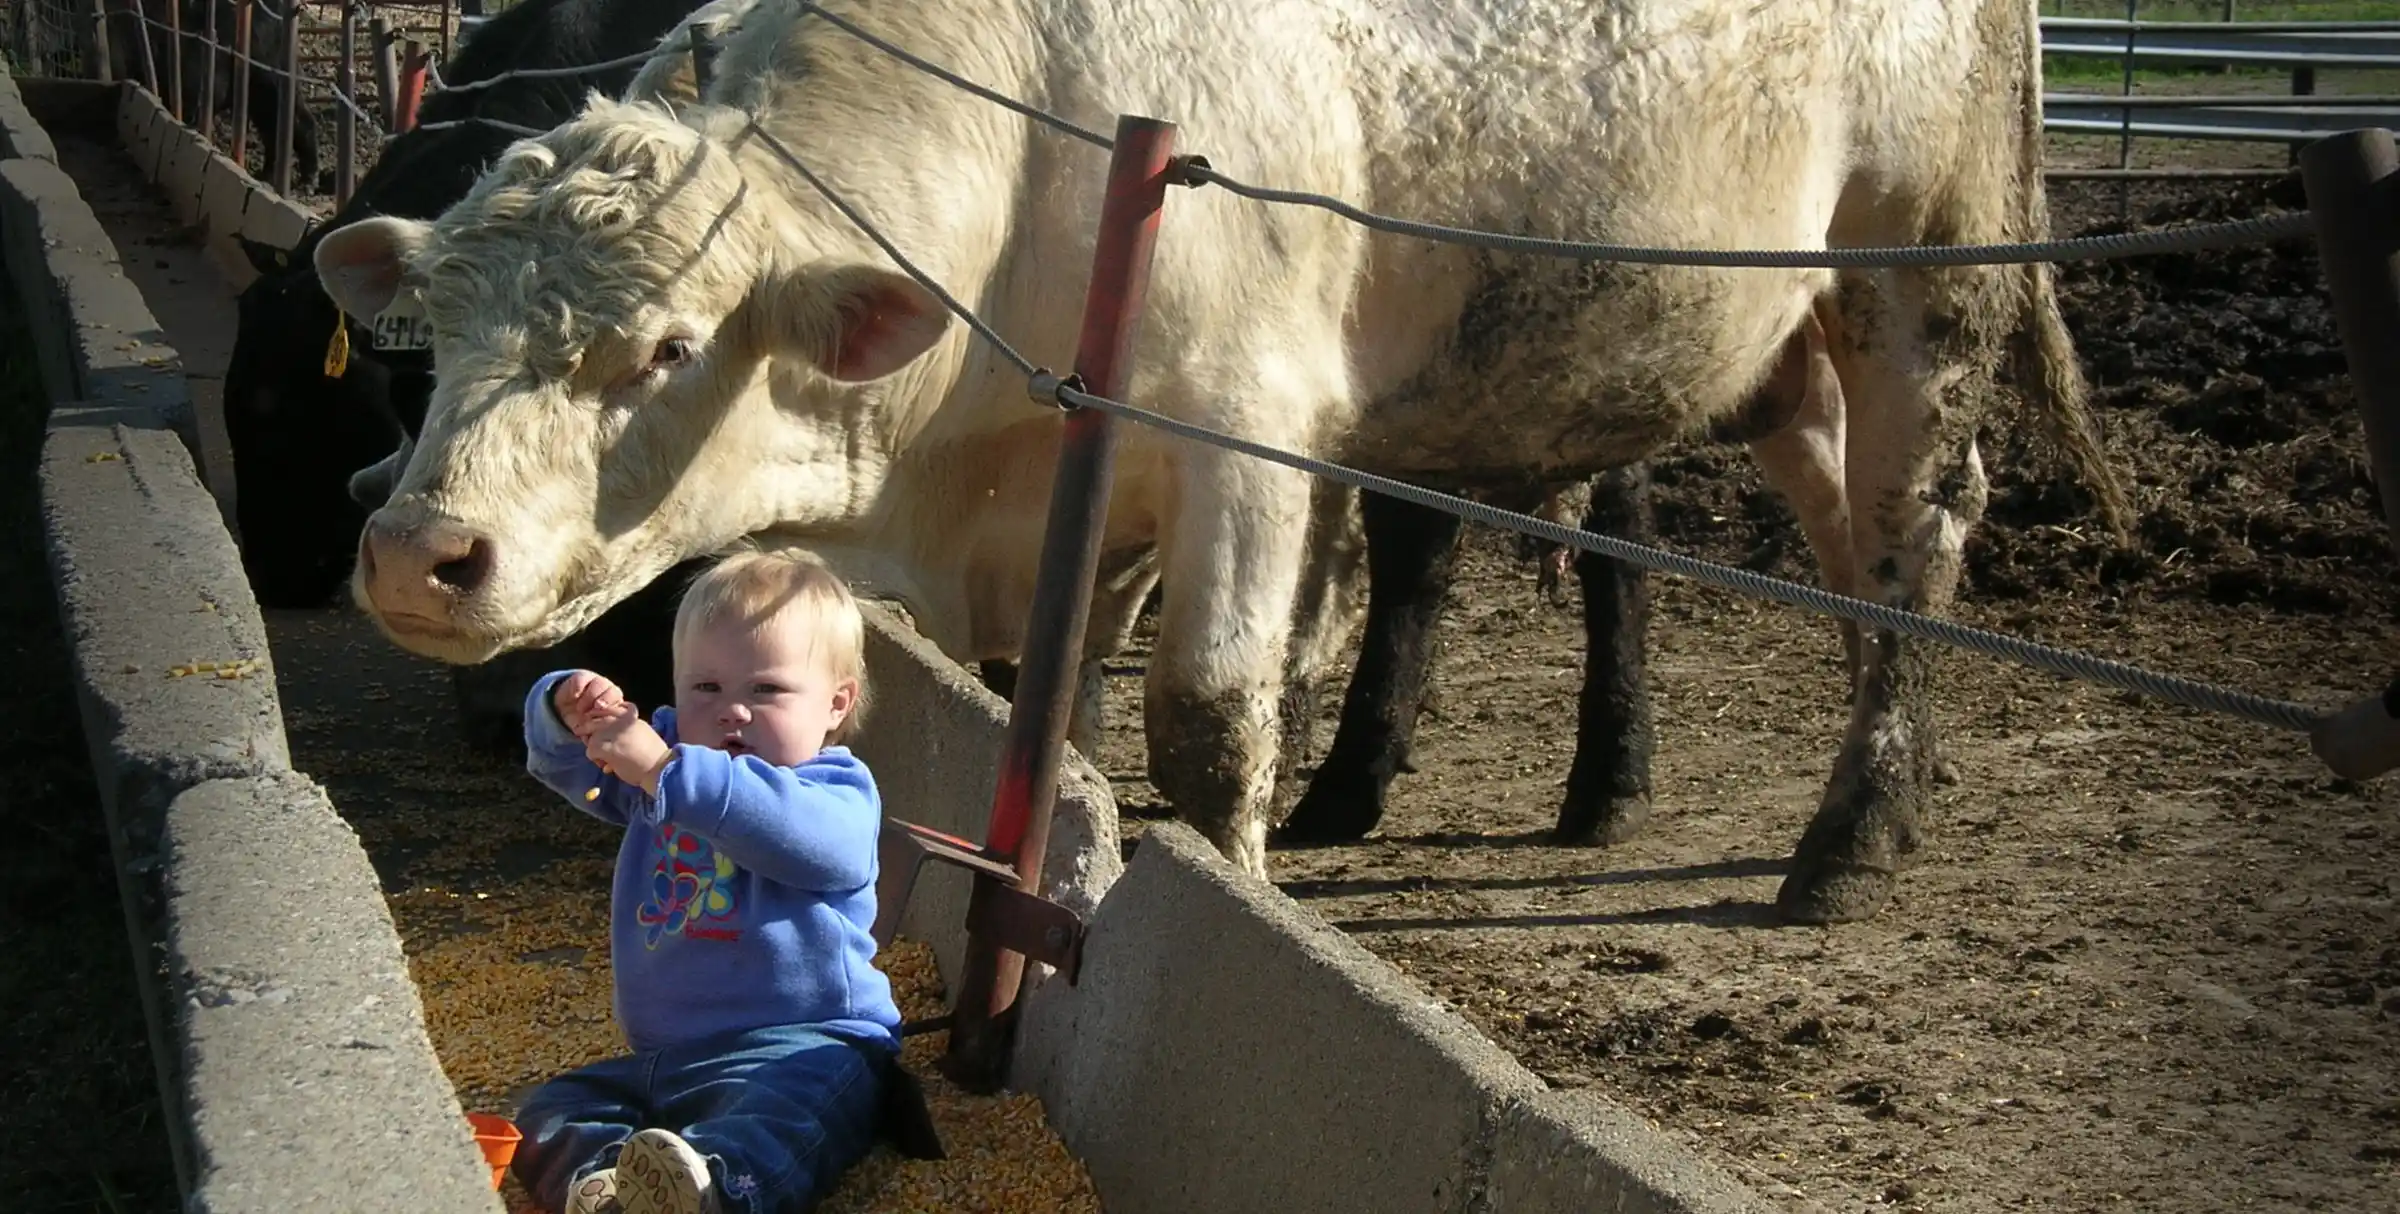 Cattle calmly peek their head through a fence near a toddler sitting on the ground.